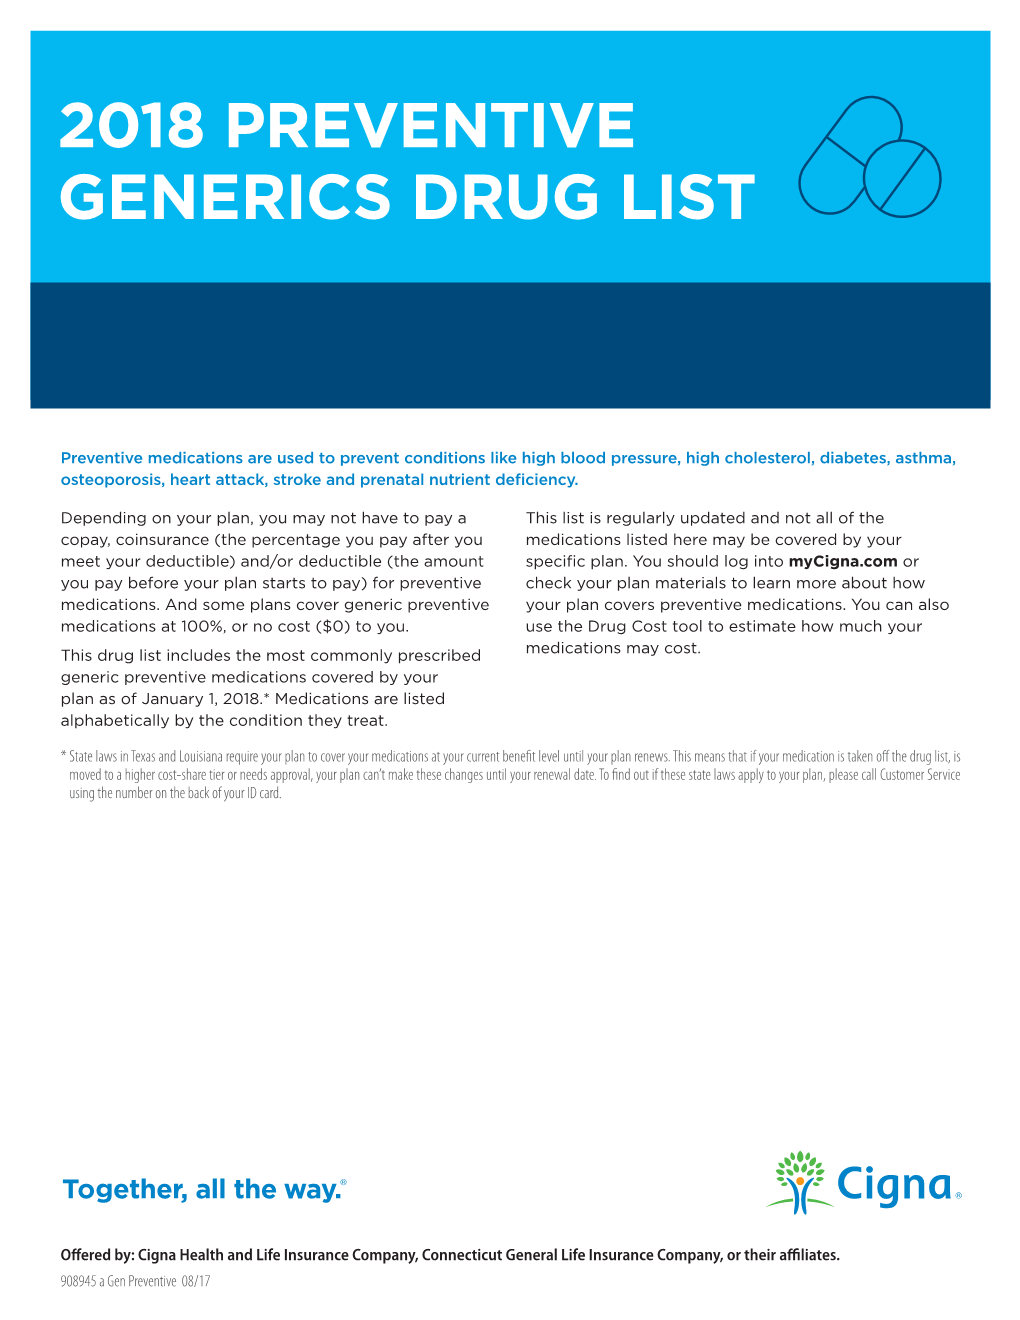 2018 Preventive Generics Drug List